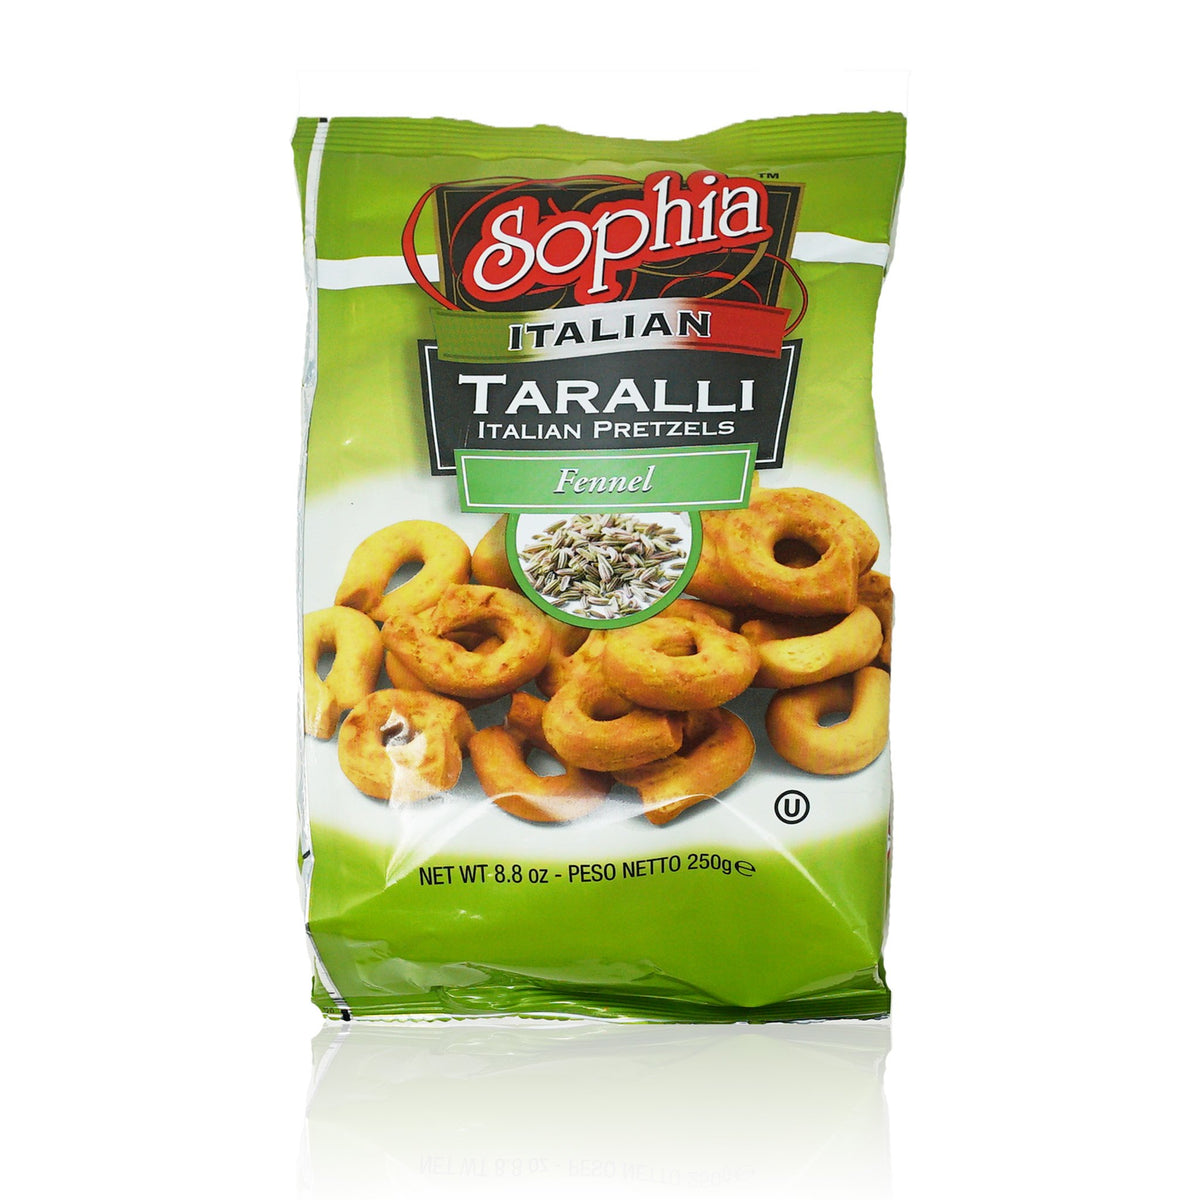 Sophia Taralli Italian Pretzels - Fennel 8.8oz